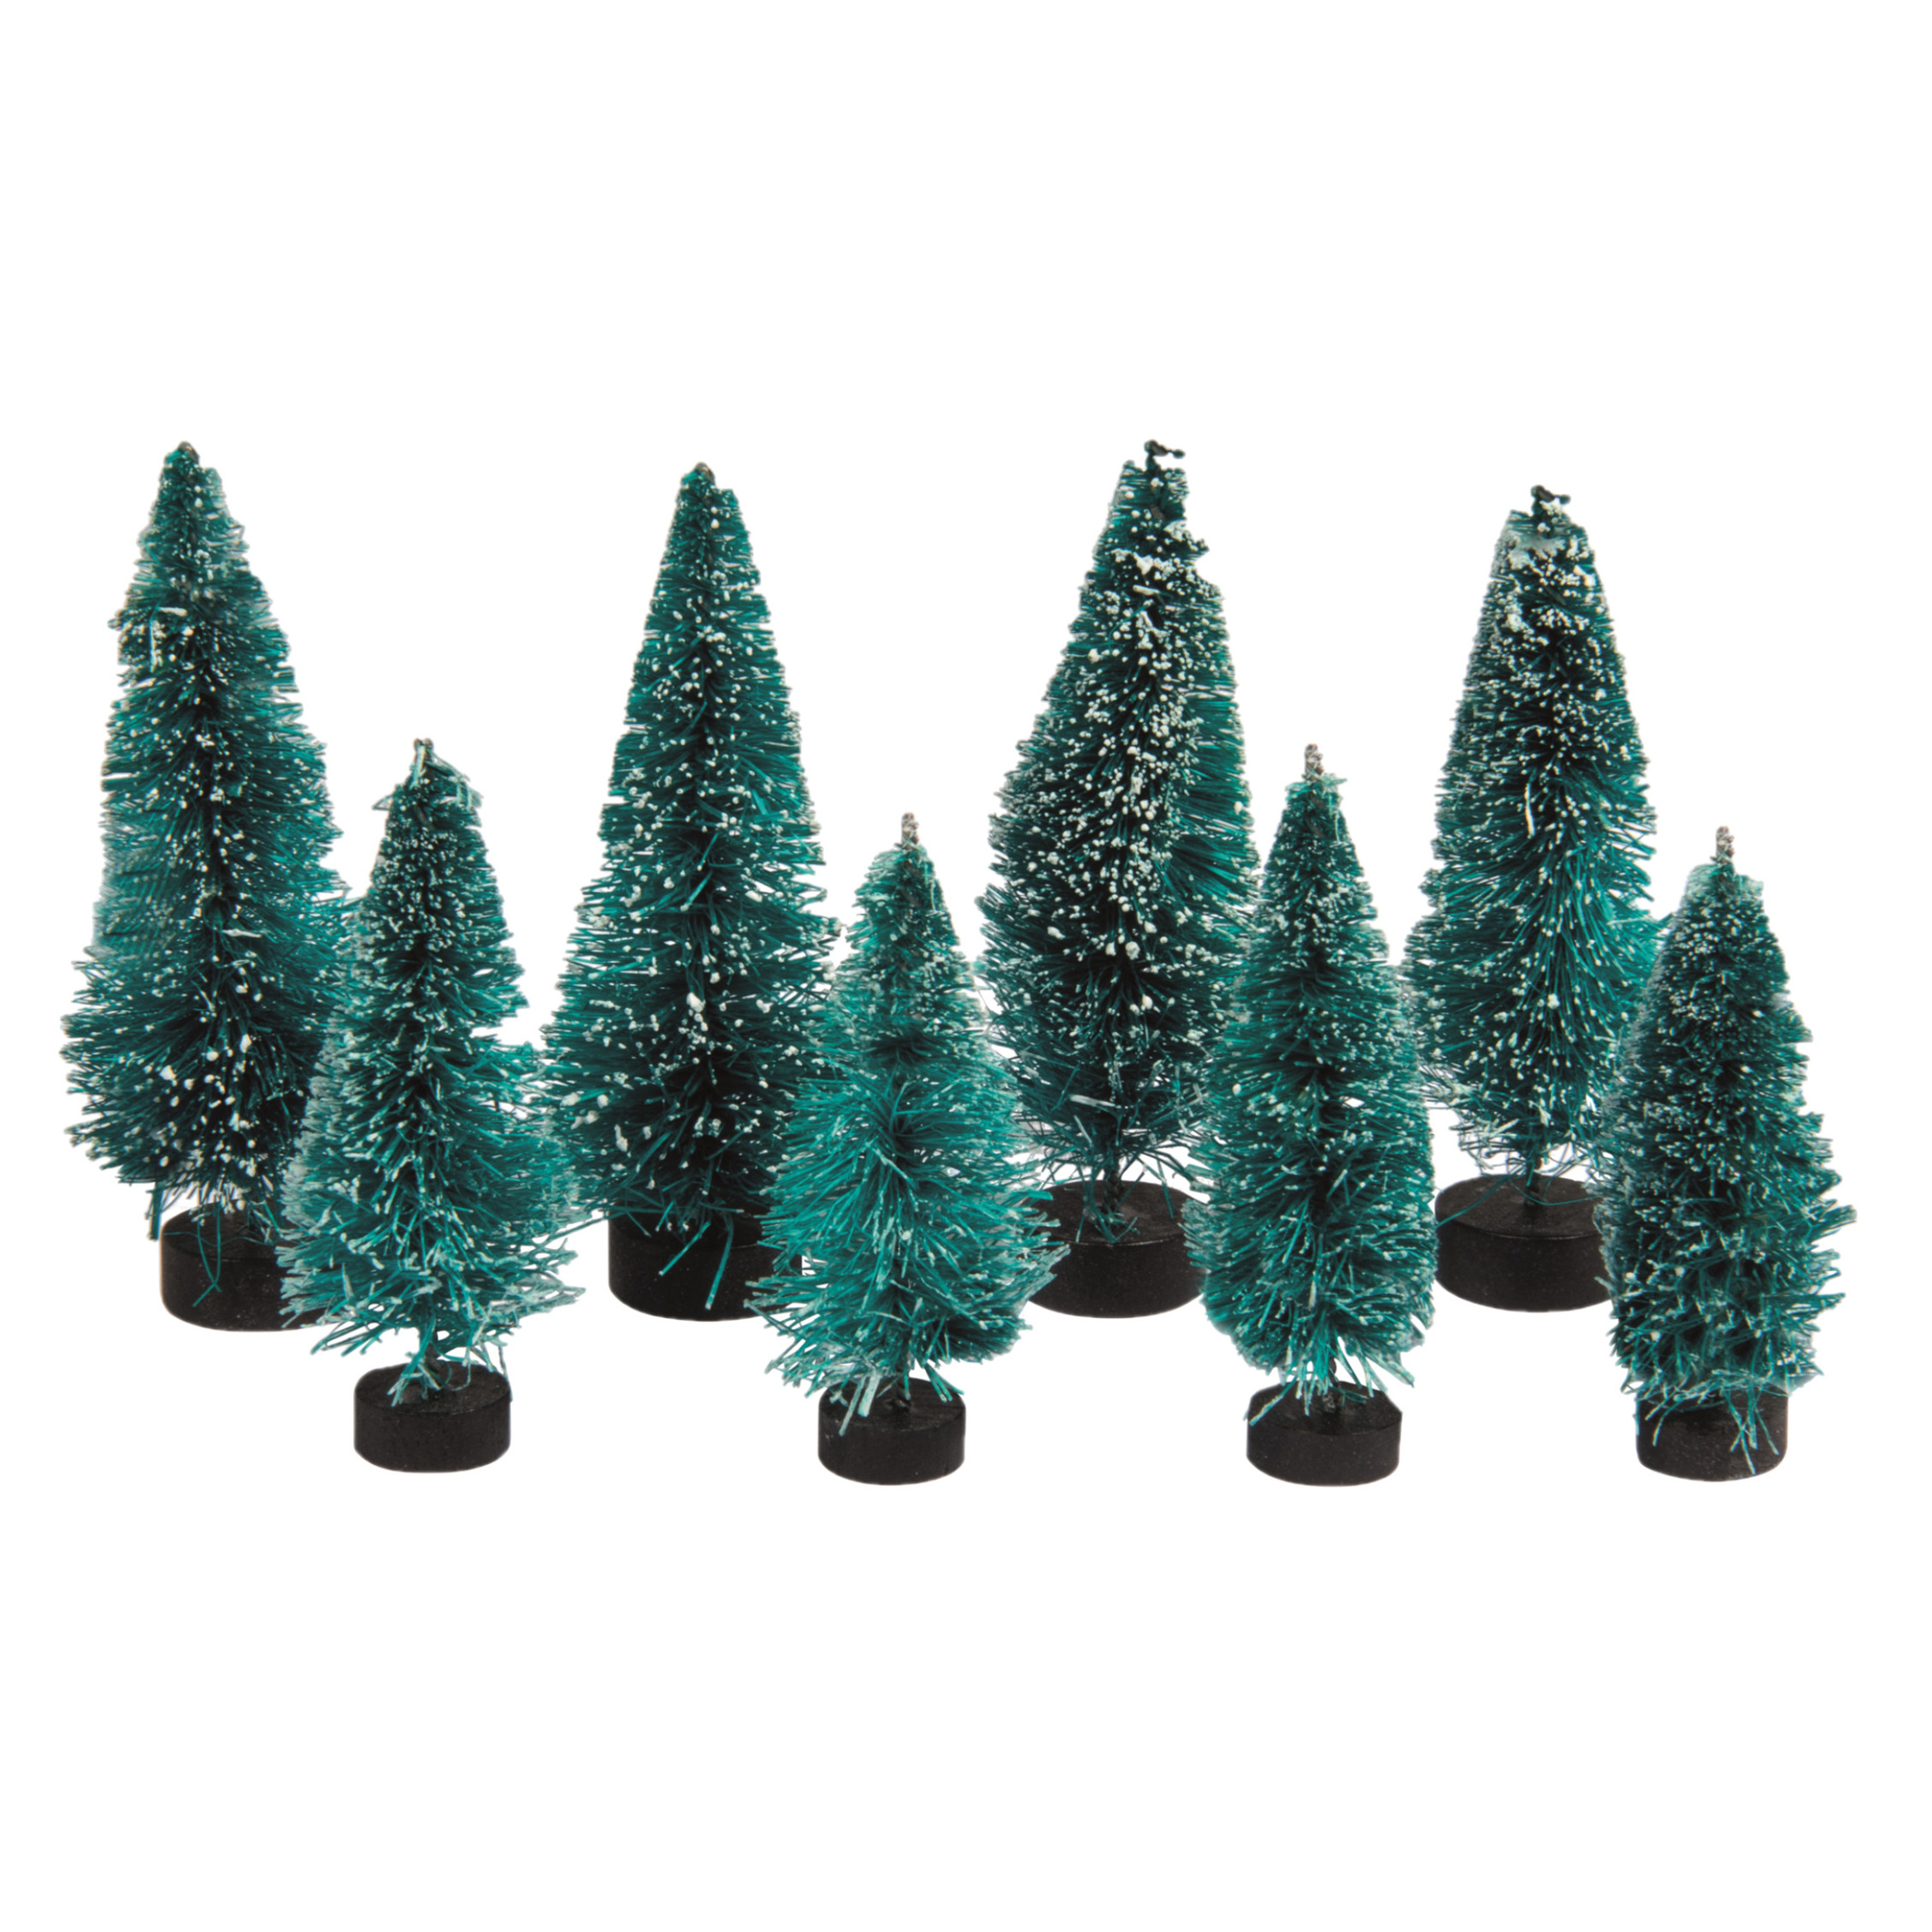 Rayher hobby kerstdorp miniatuur boompjes 16x stuks 5 en 7 cm